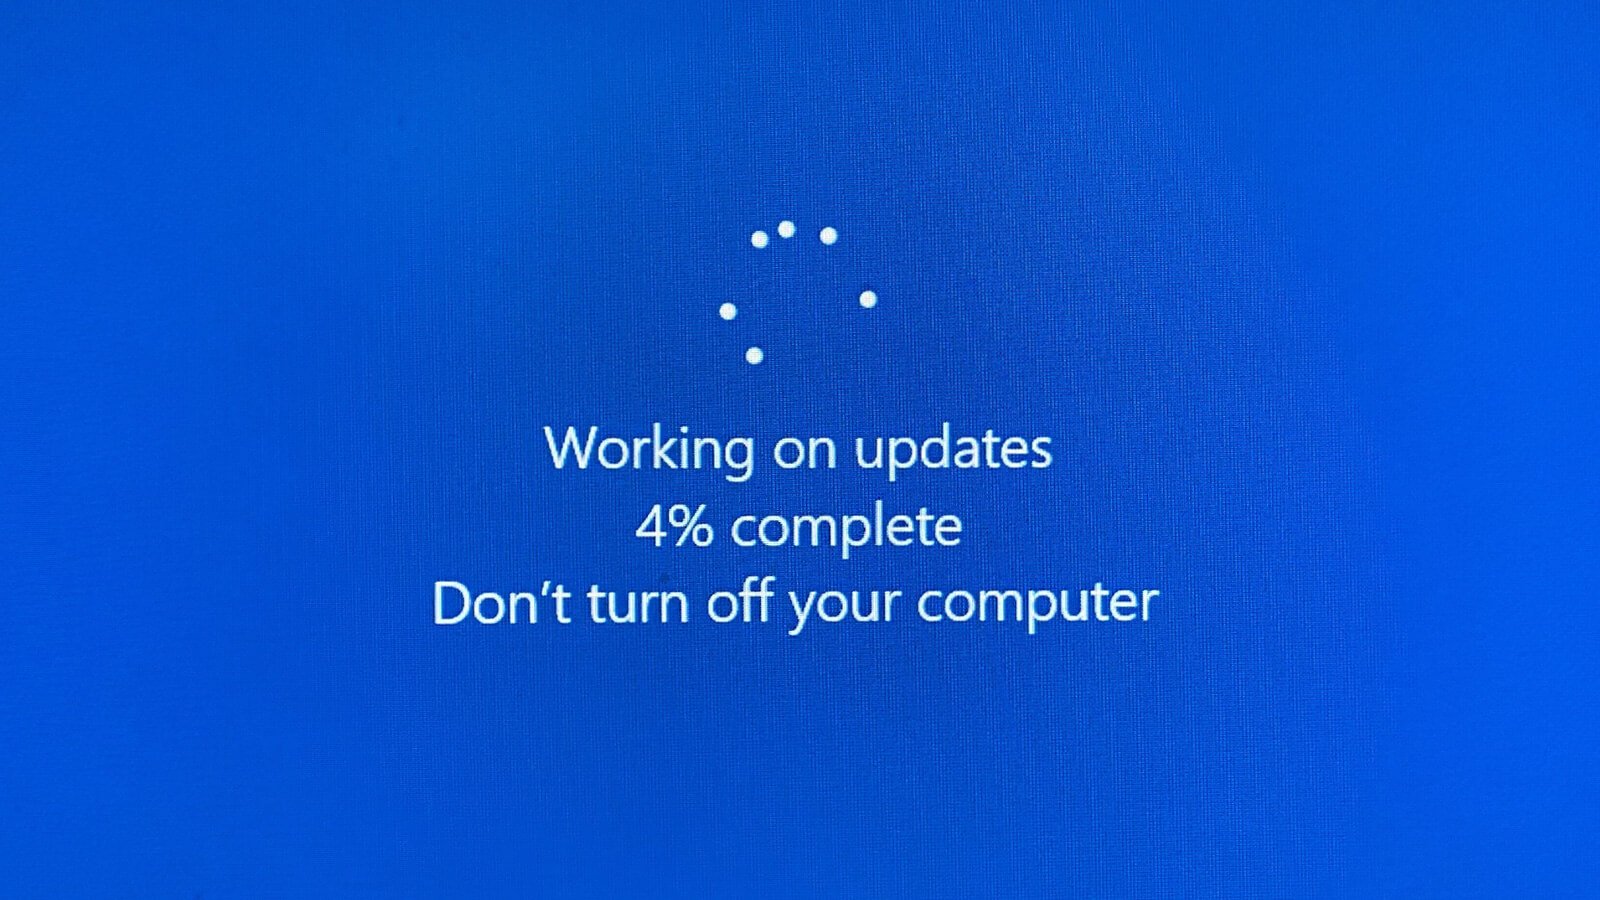 Microsoft pushes Windows 10 KB4023057 again to fix update issues